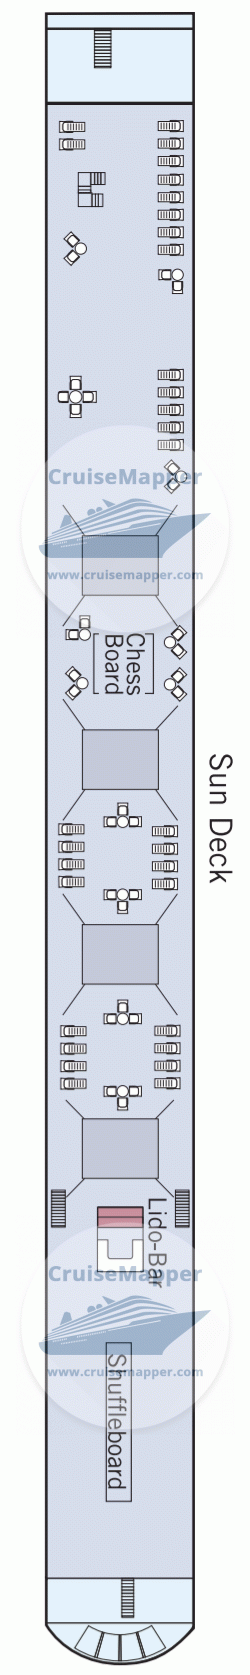 MS Amadeus Silver II Deck 04 - Sundeck